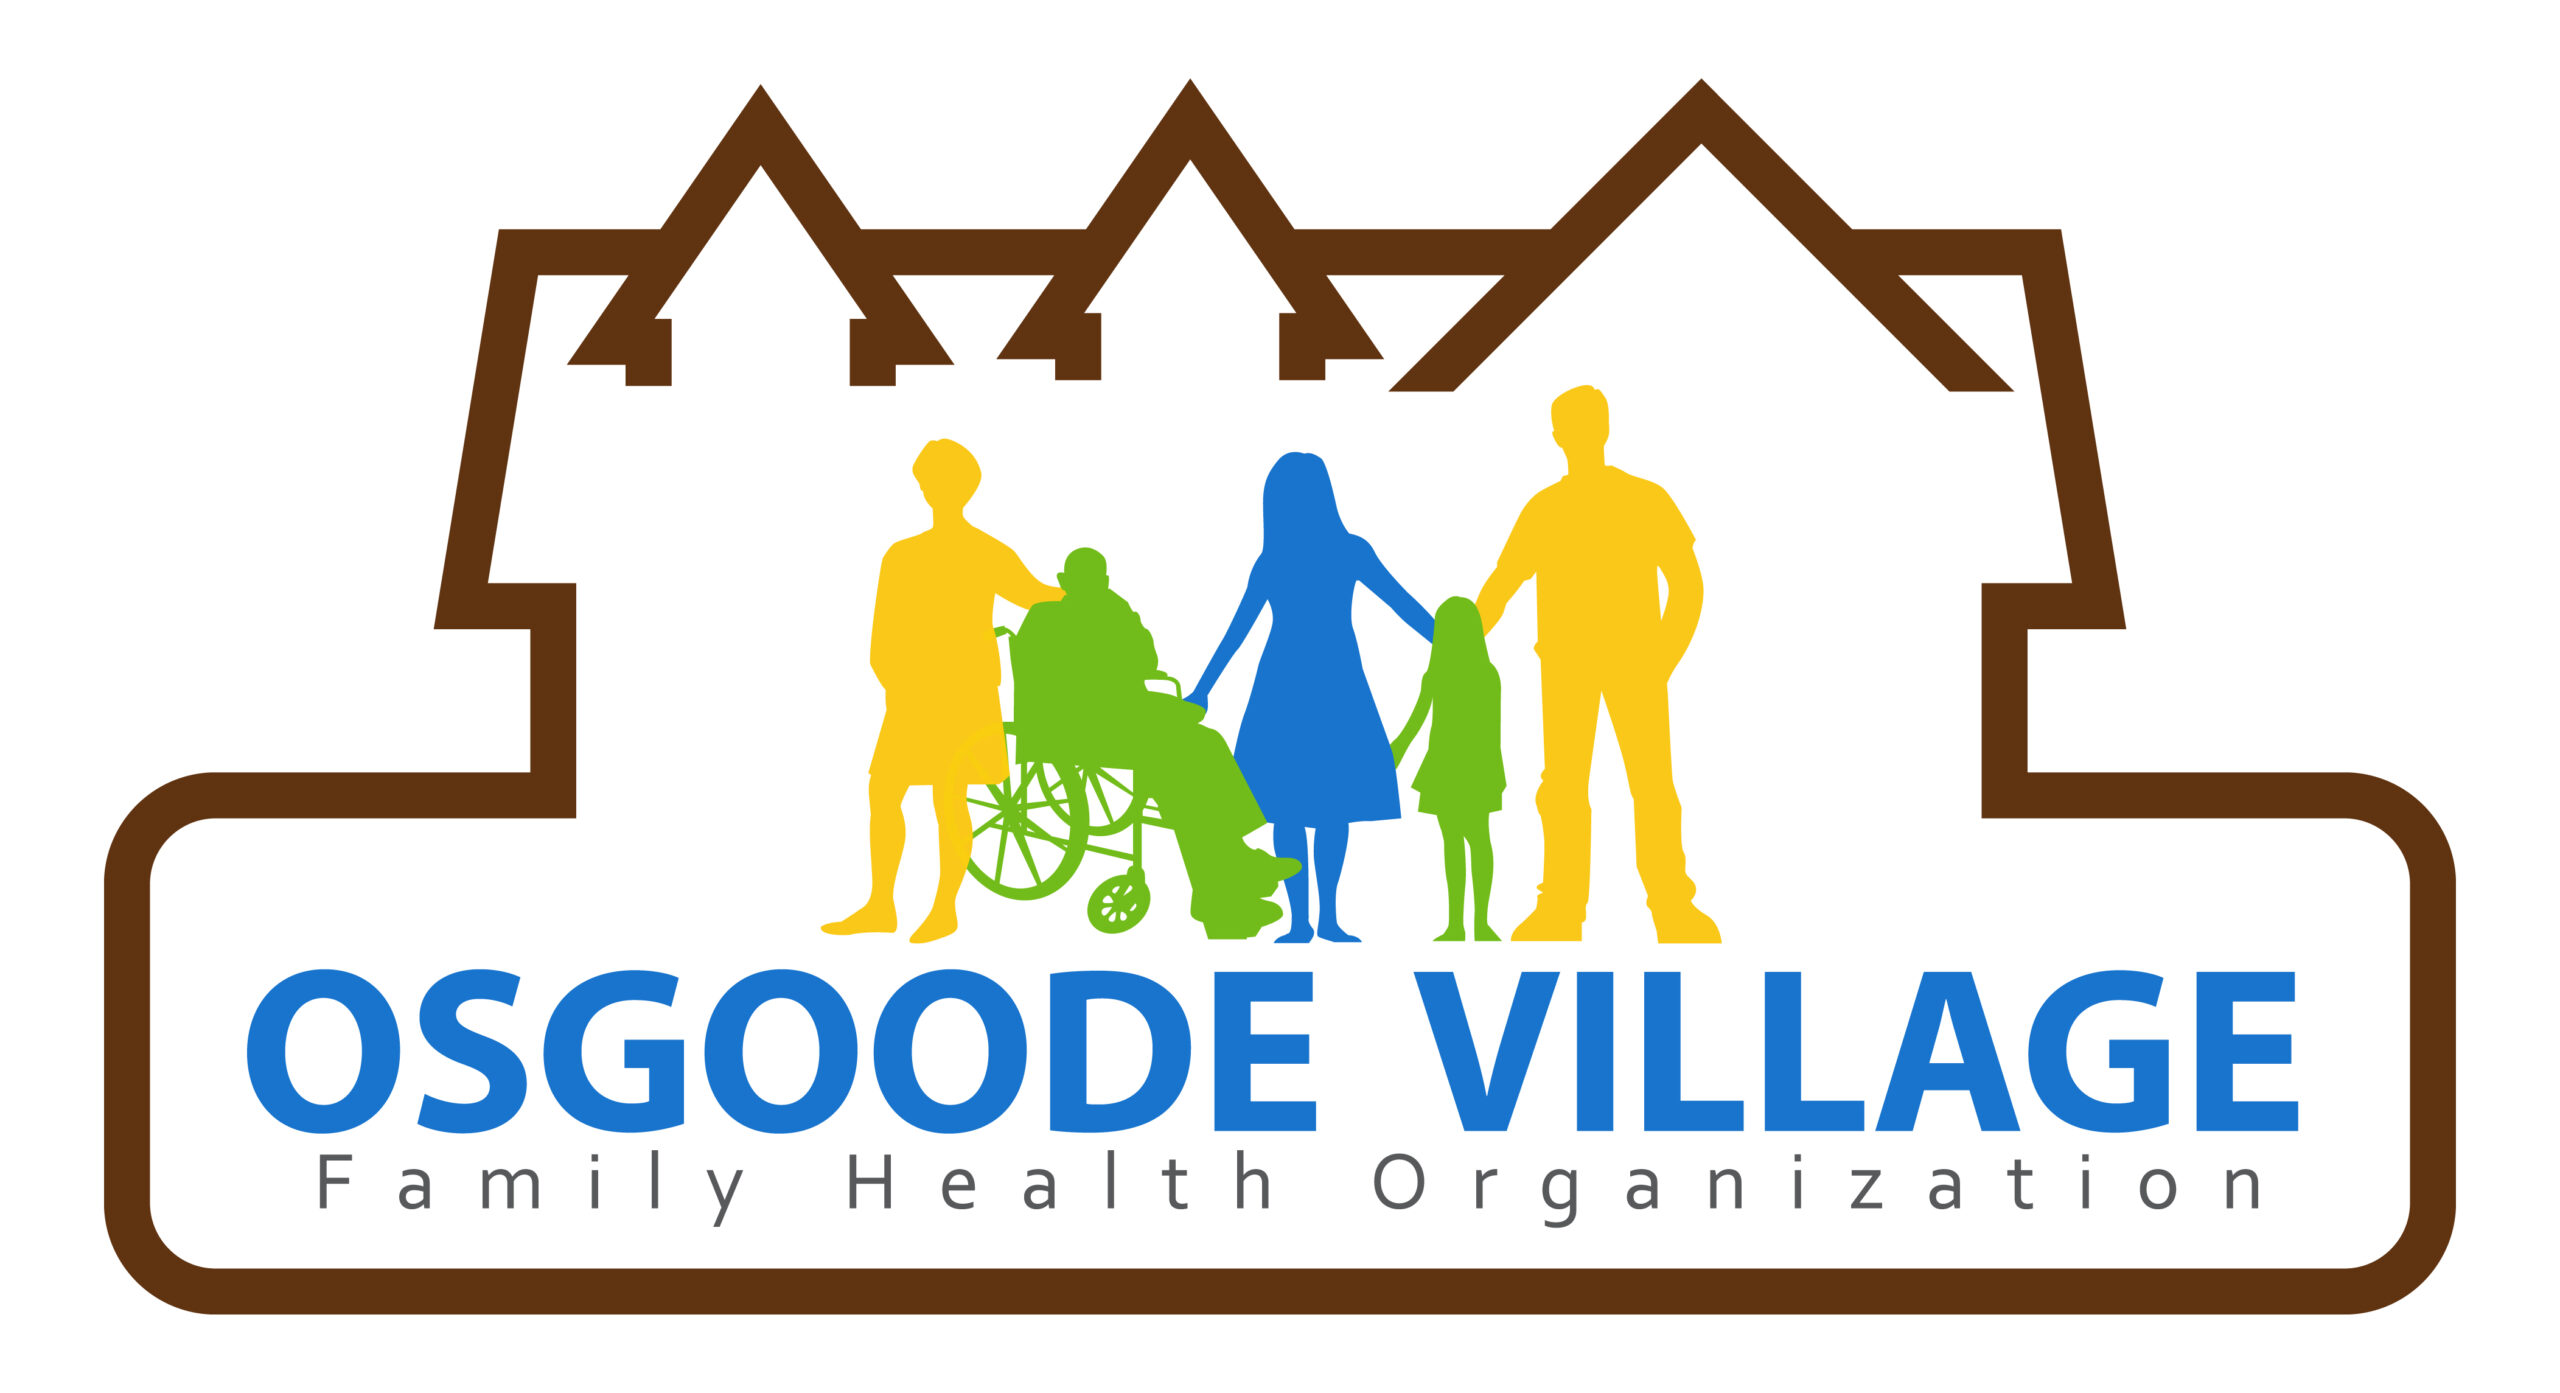 Osgoode Village Family Health Organization